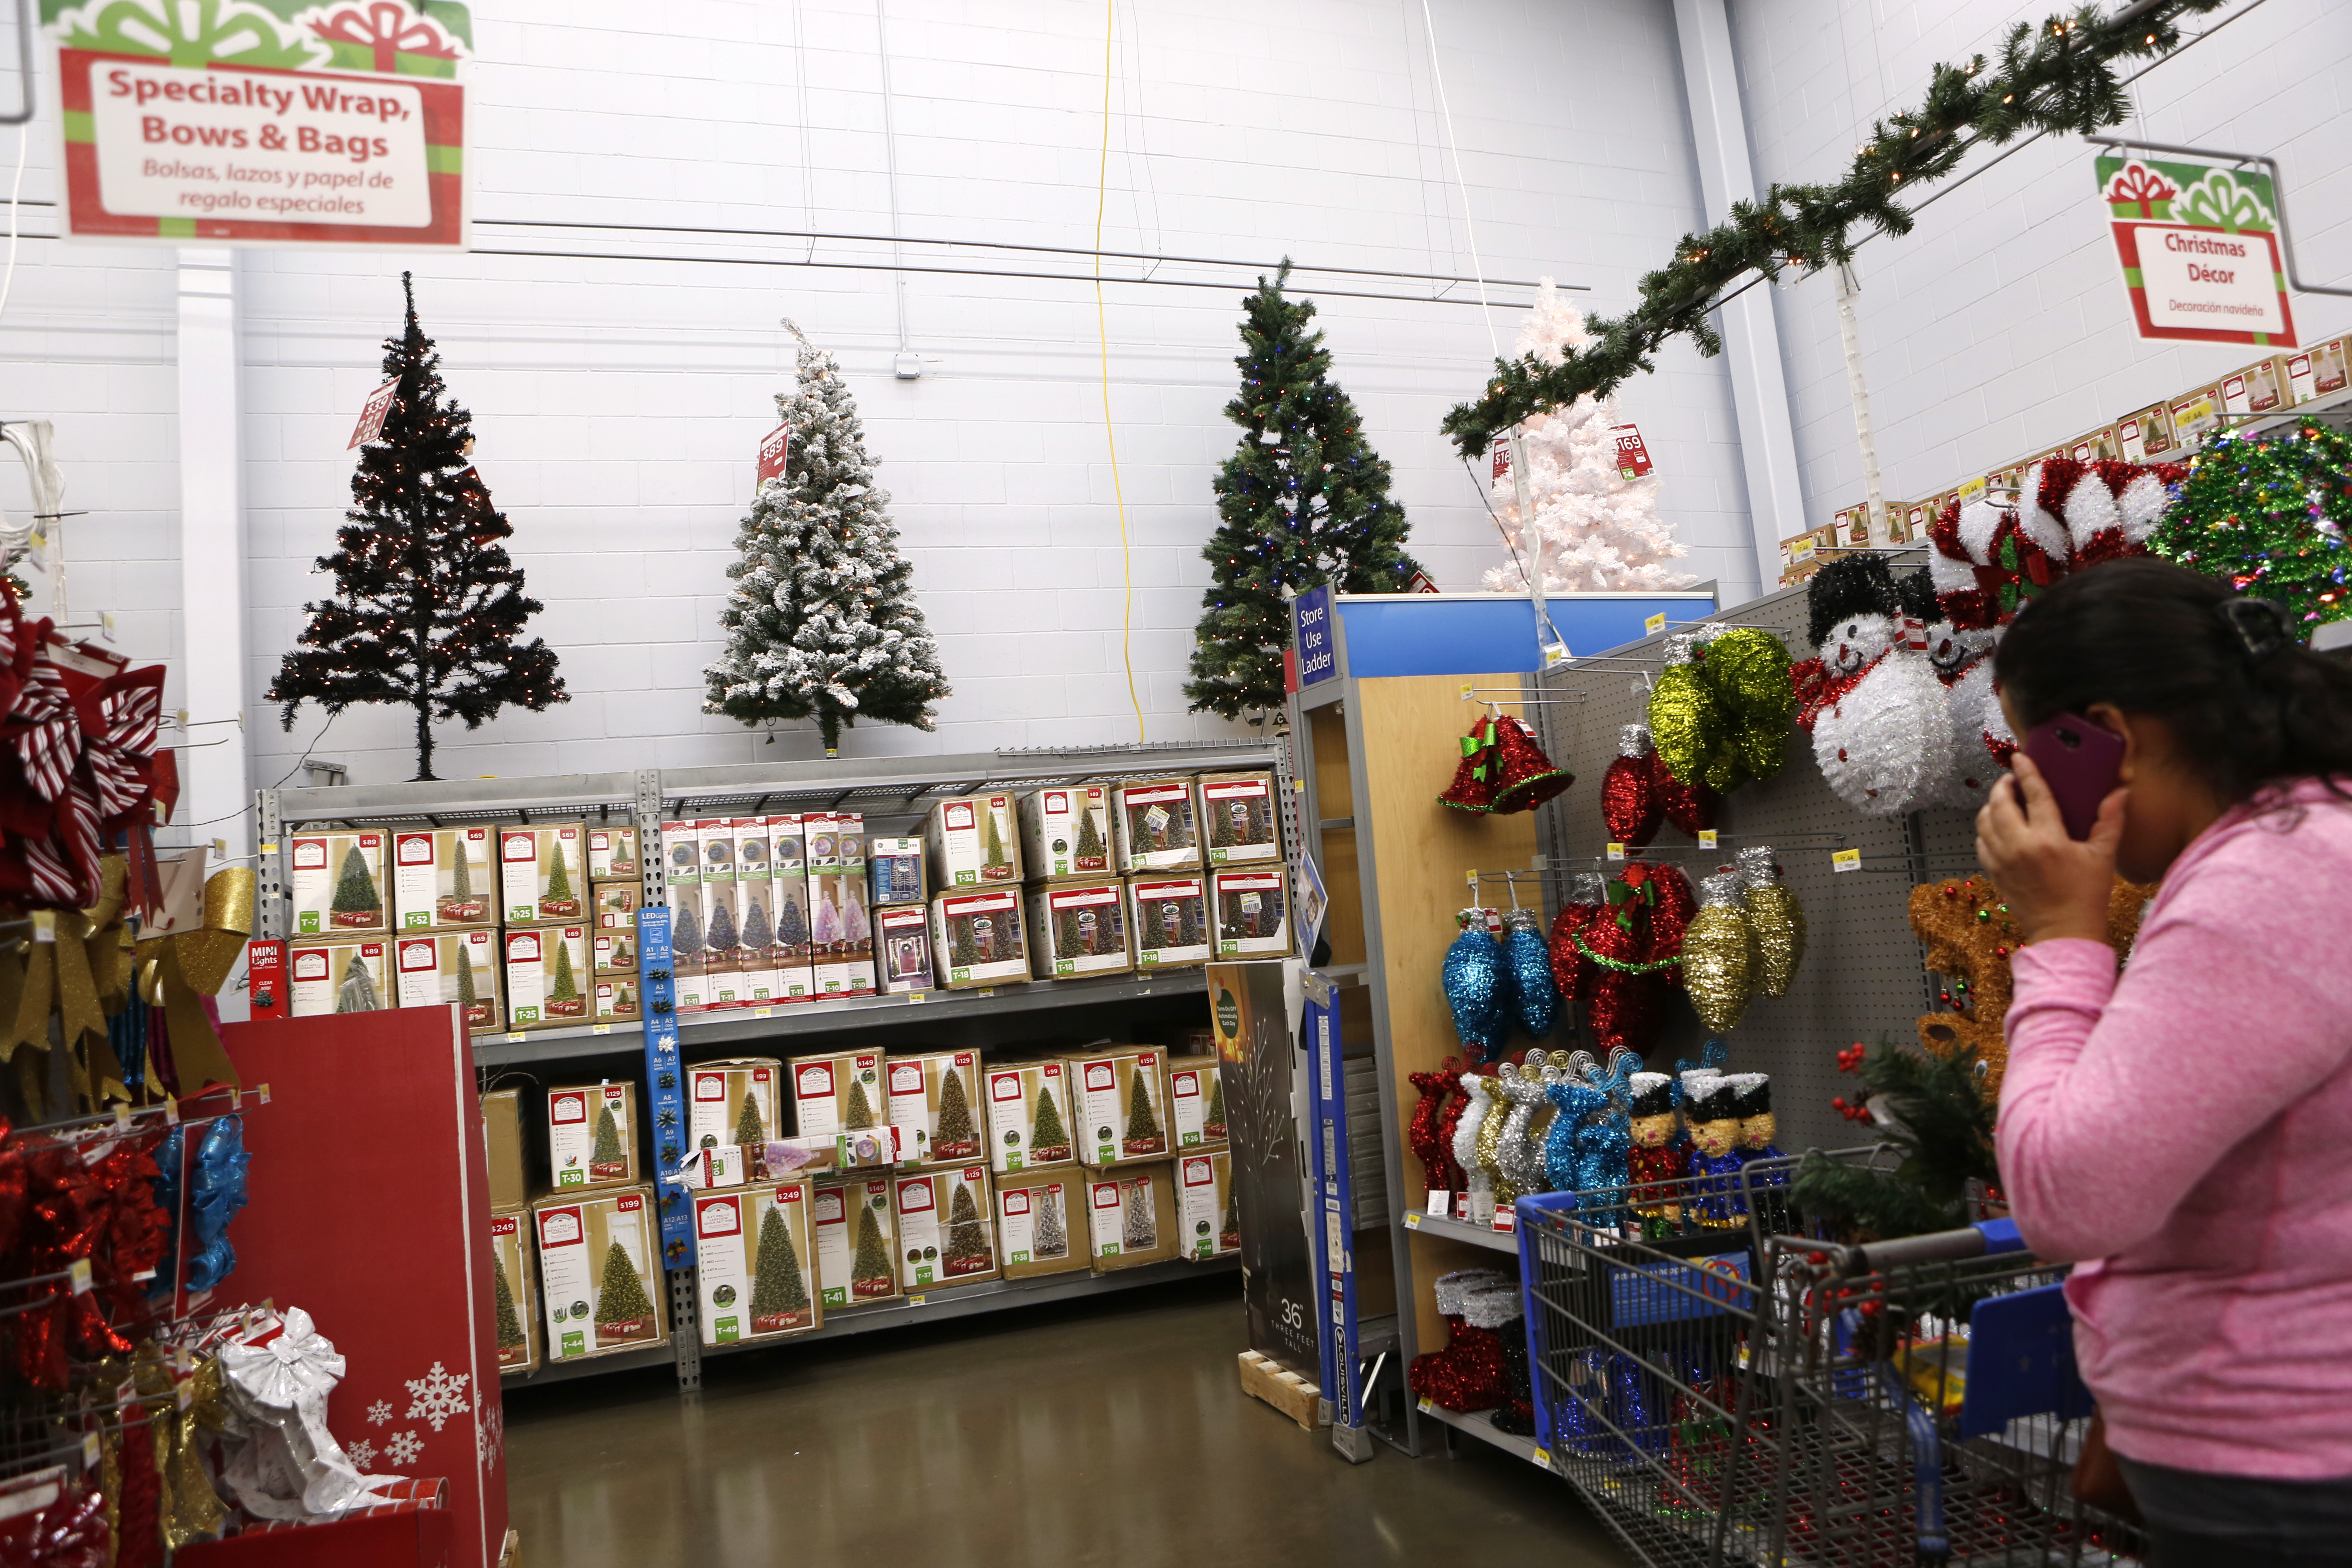 Christmas trees on display at Walmart in Dallas. Photographed on Monday, November 16, 2015. Photo/Lara Solt